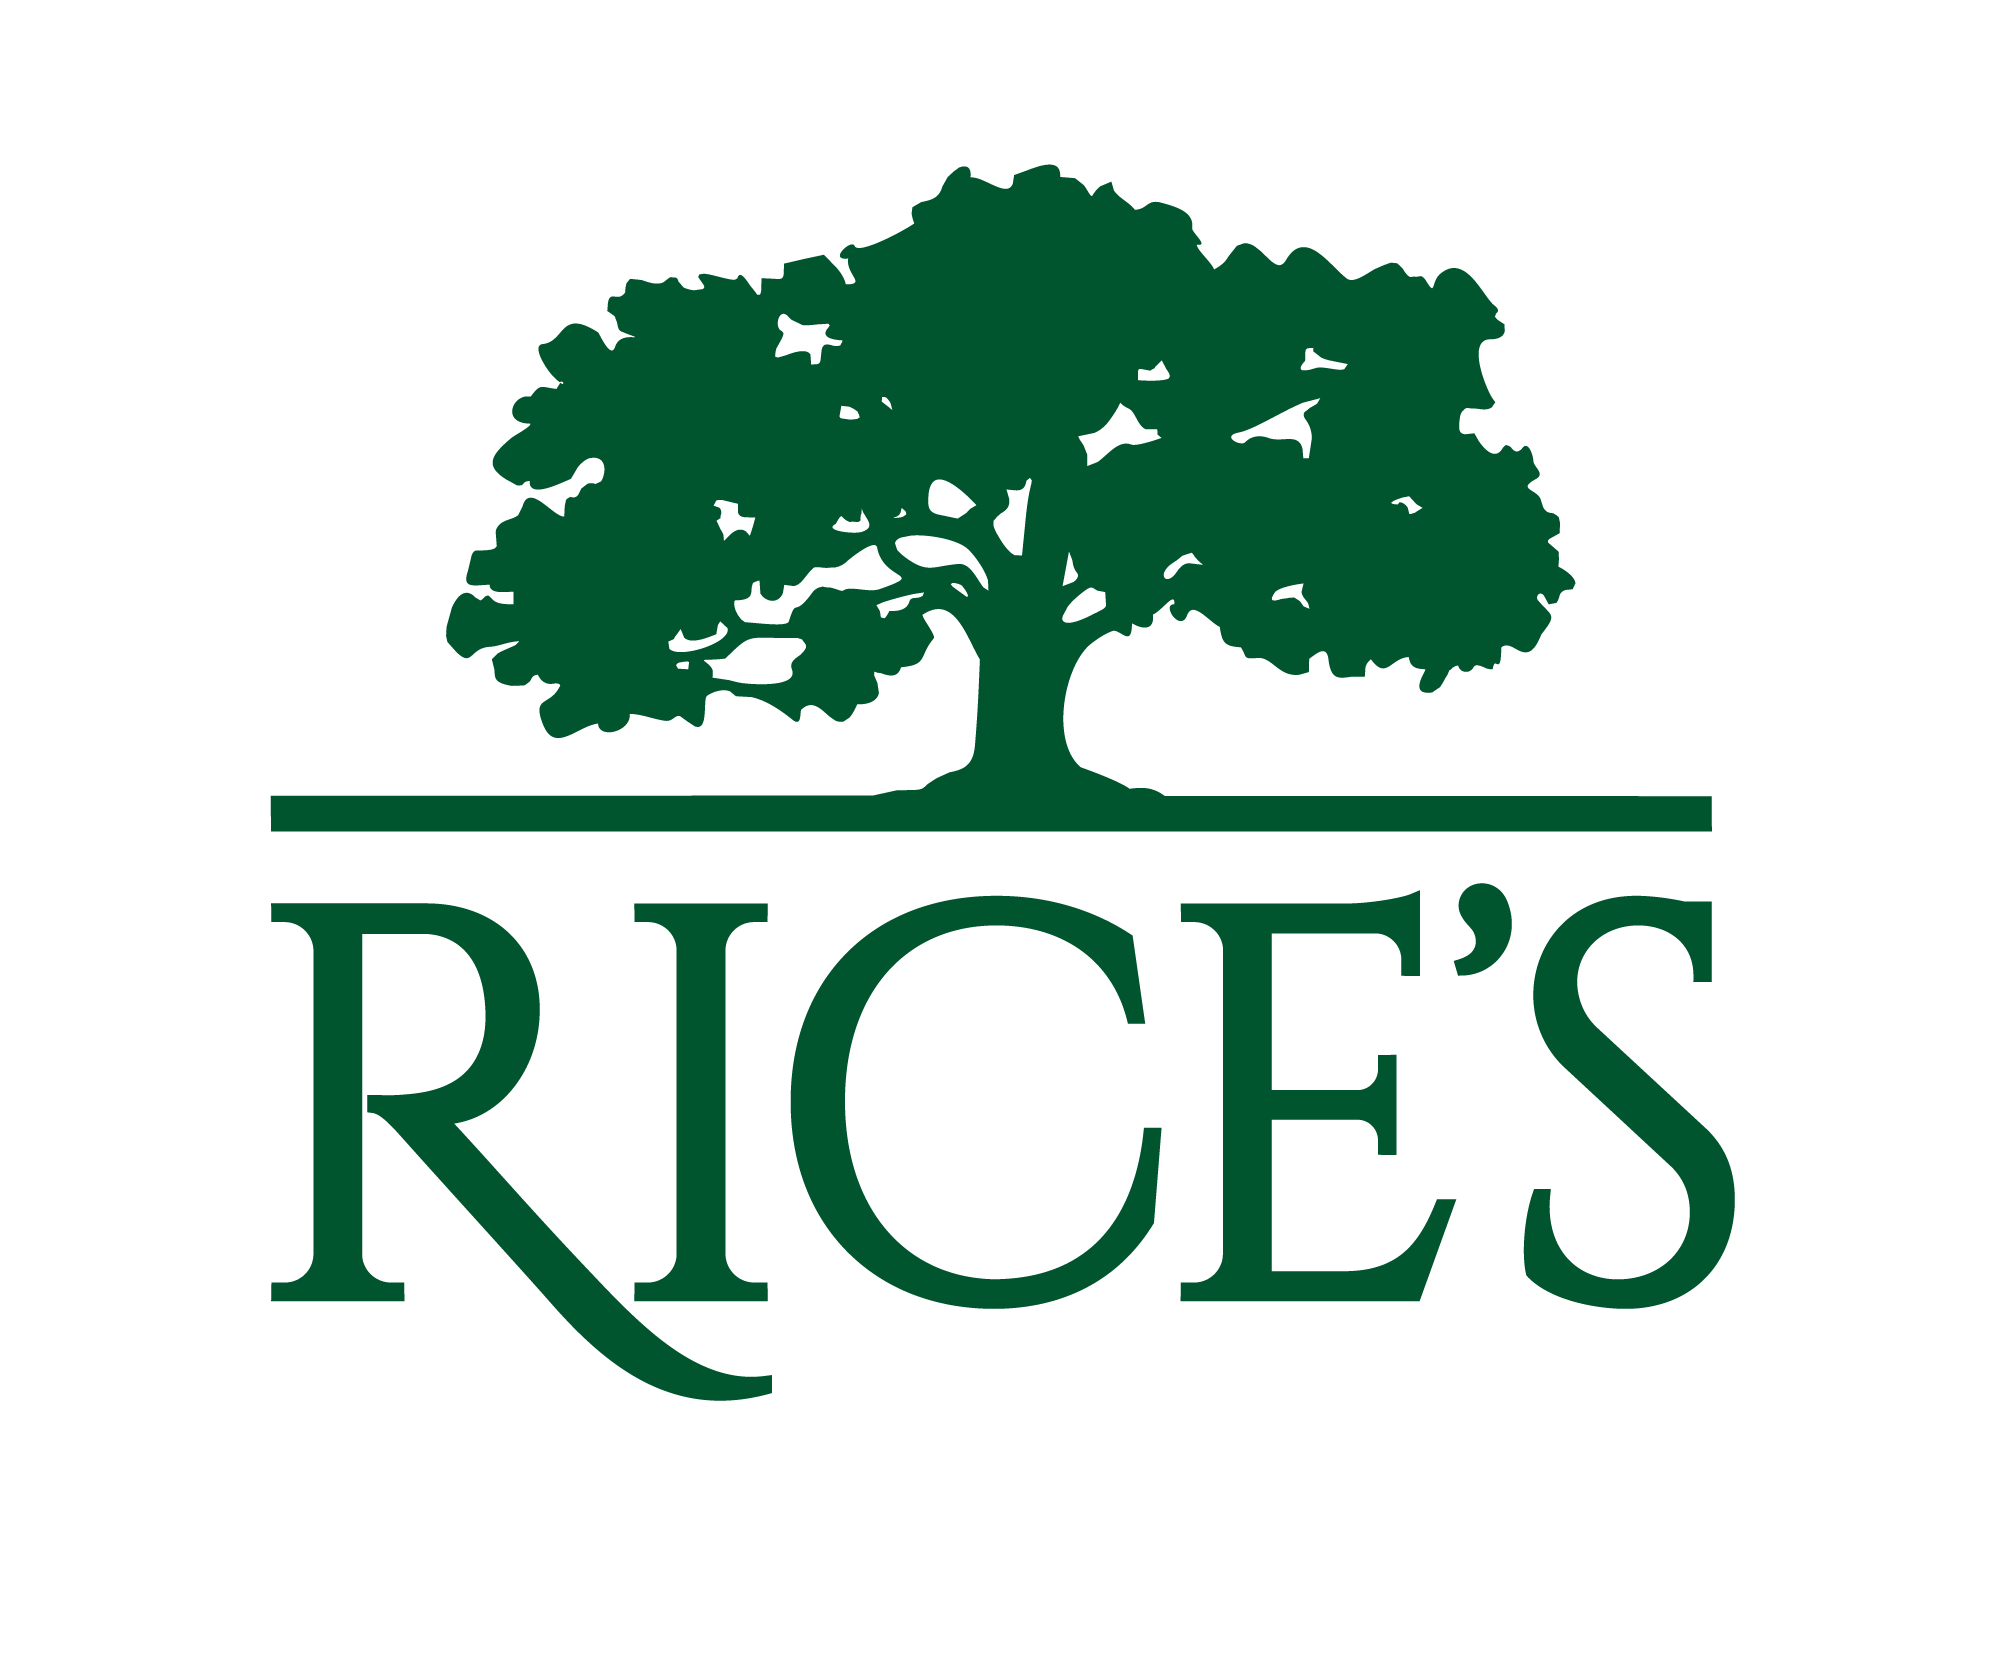 Rice's logo